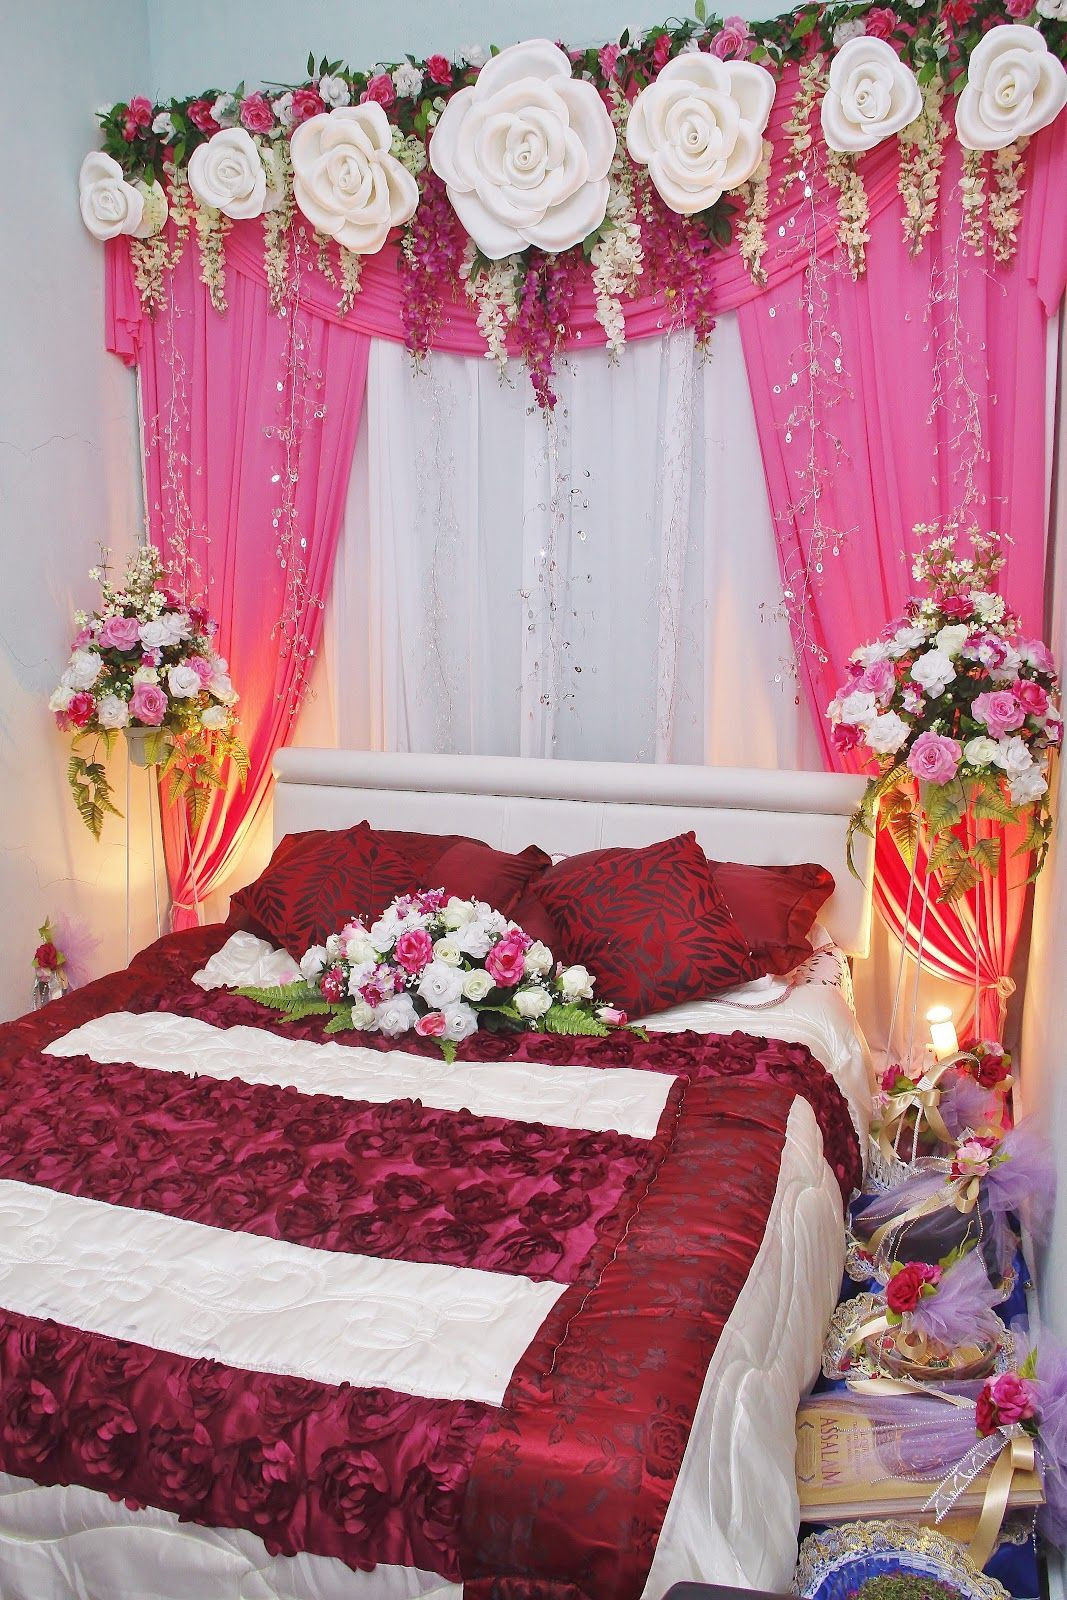 Romantic Bedroom Ideas For Valentines Day
 46 Valentines Day Decor Bedroom Romantic s